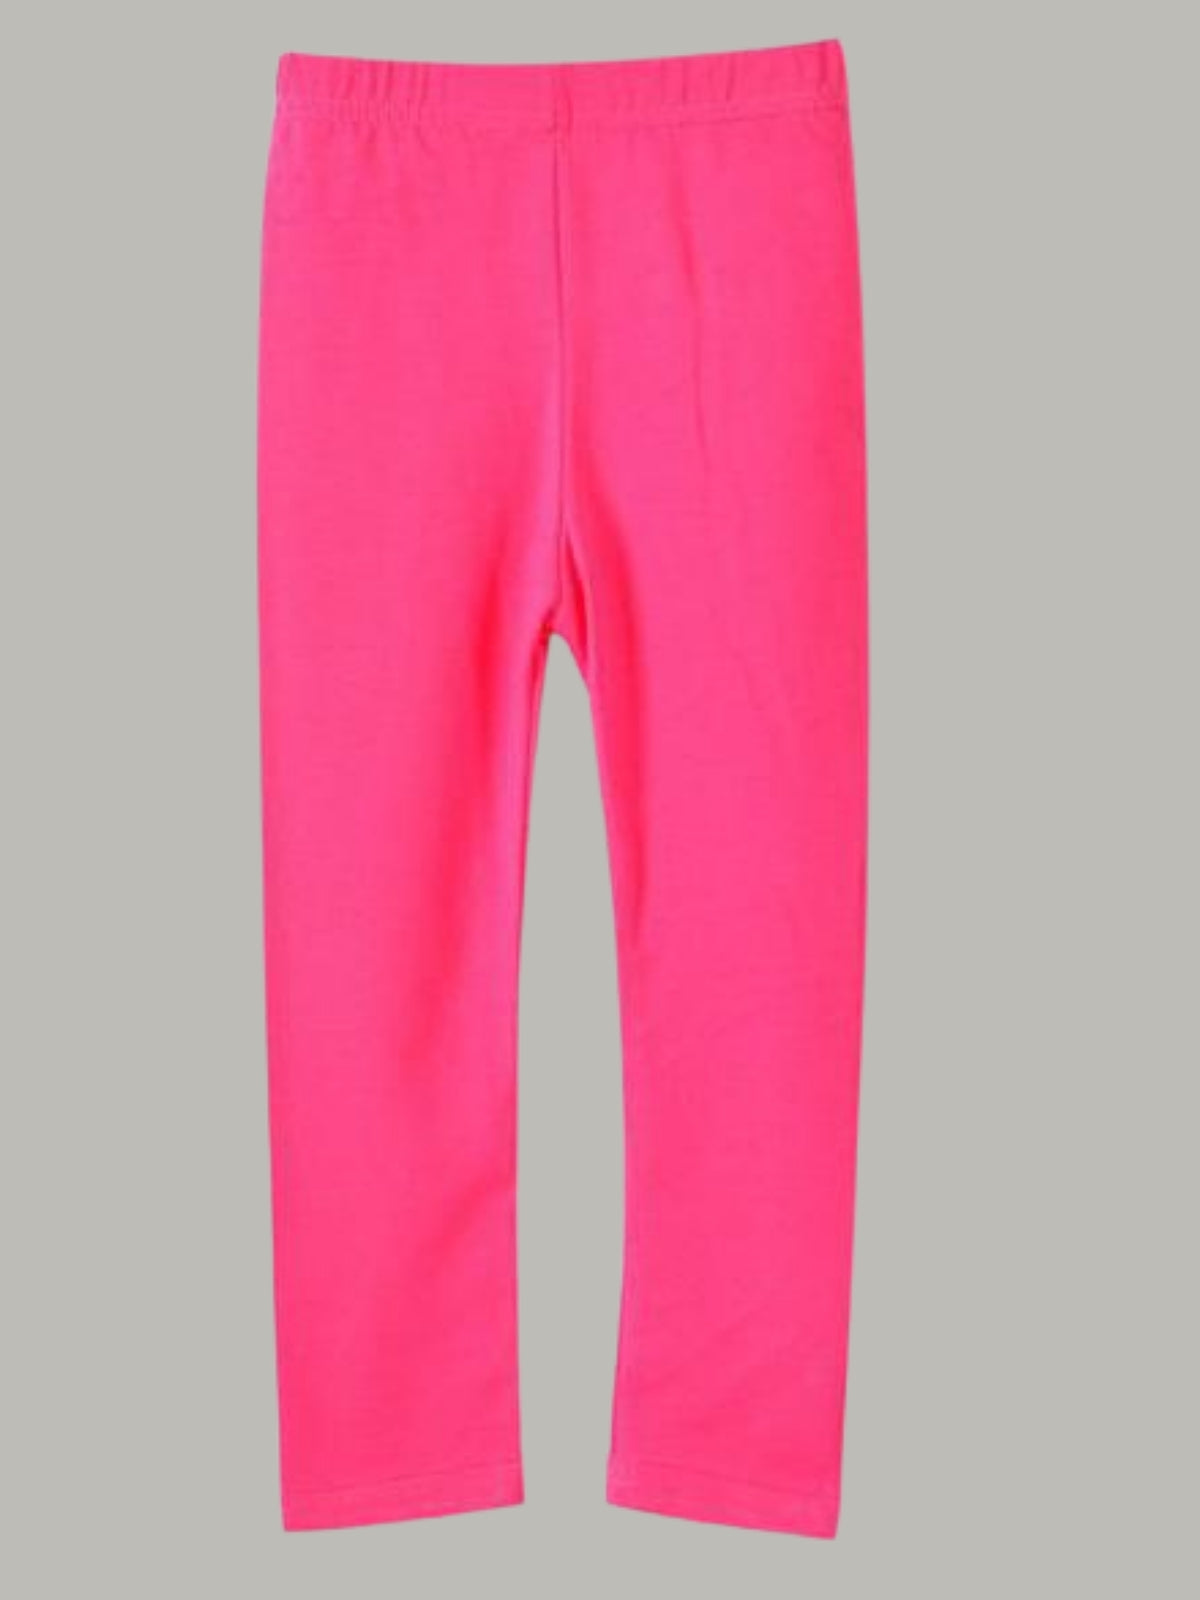 Girls Soft Elastic Candy Color Leggings - hot pink